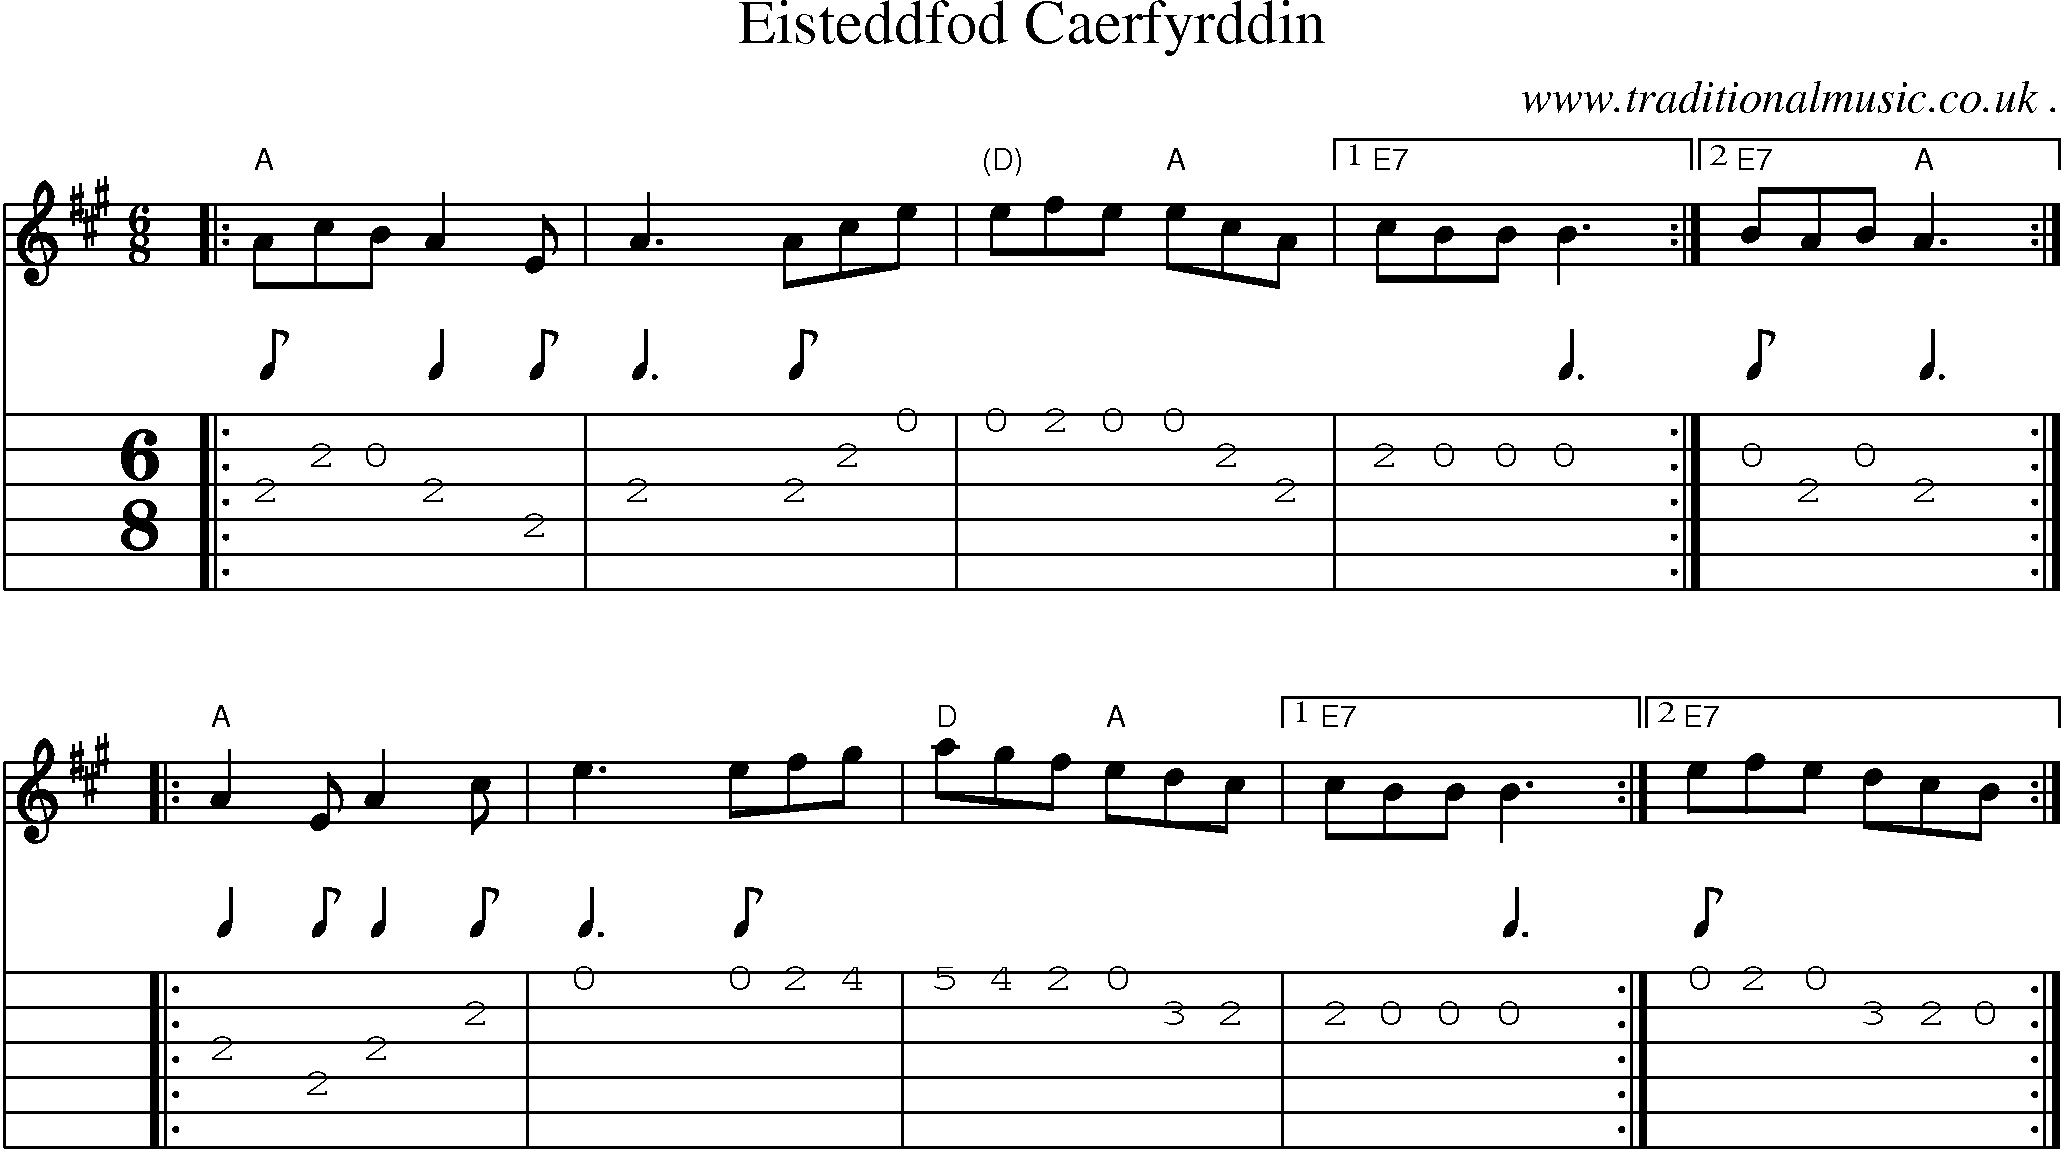 Sheet-music  score, Chords and Guitar Tabs for Eisteddfod Caerfyrddin